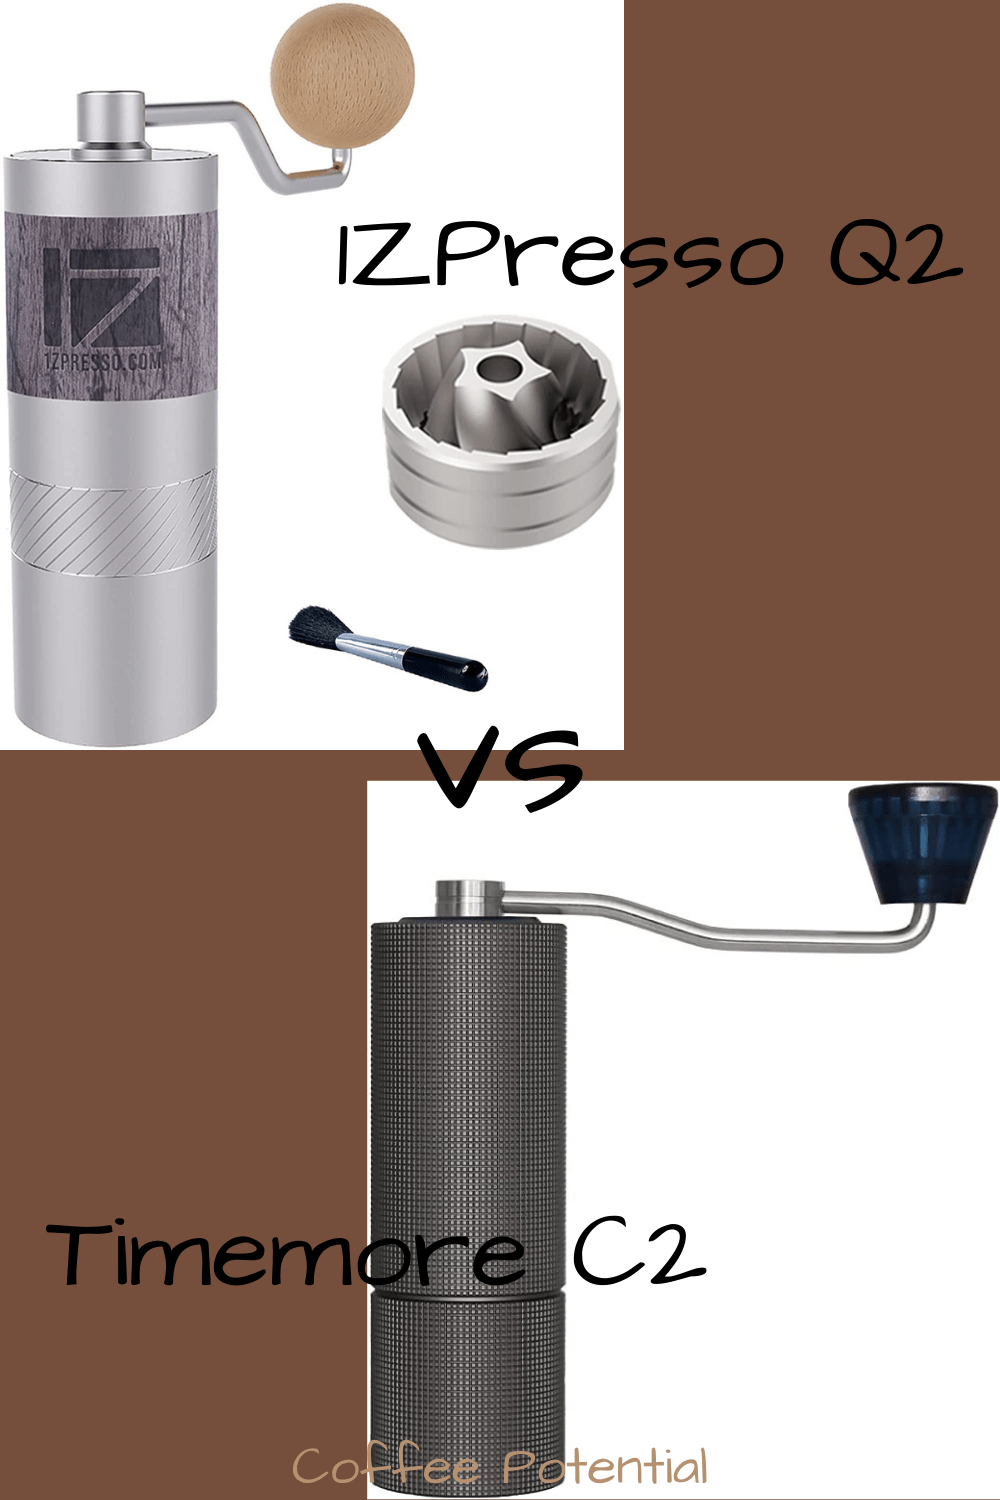 1zpresso q2 vs timemore c2